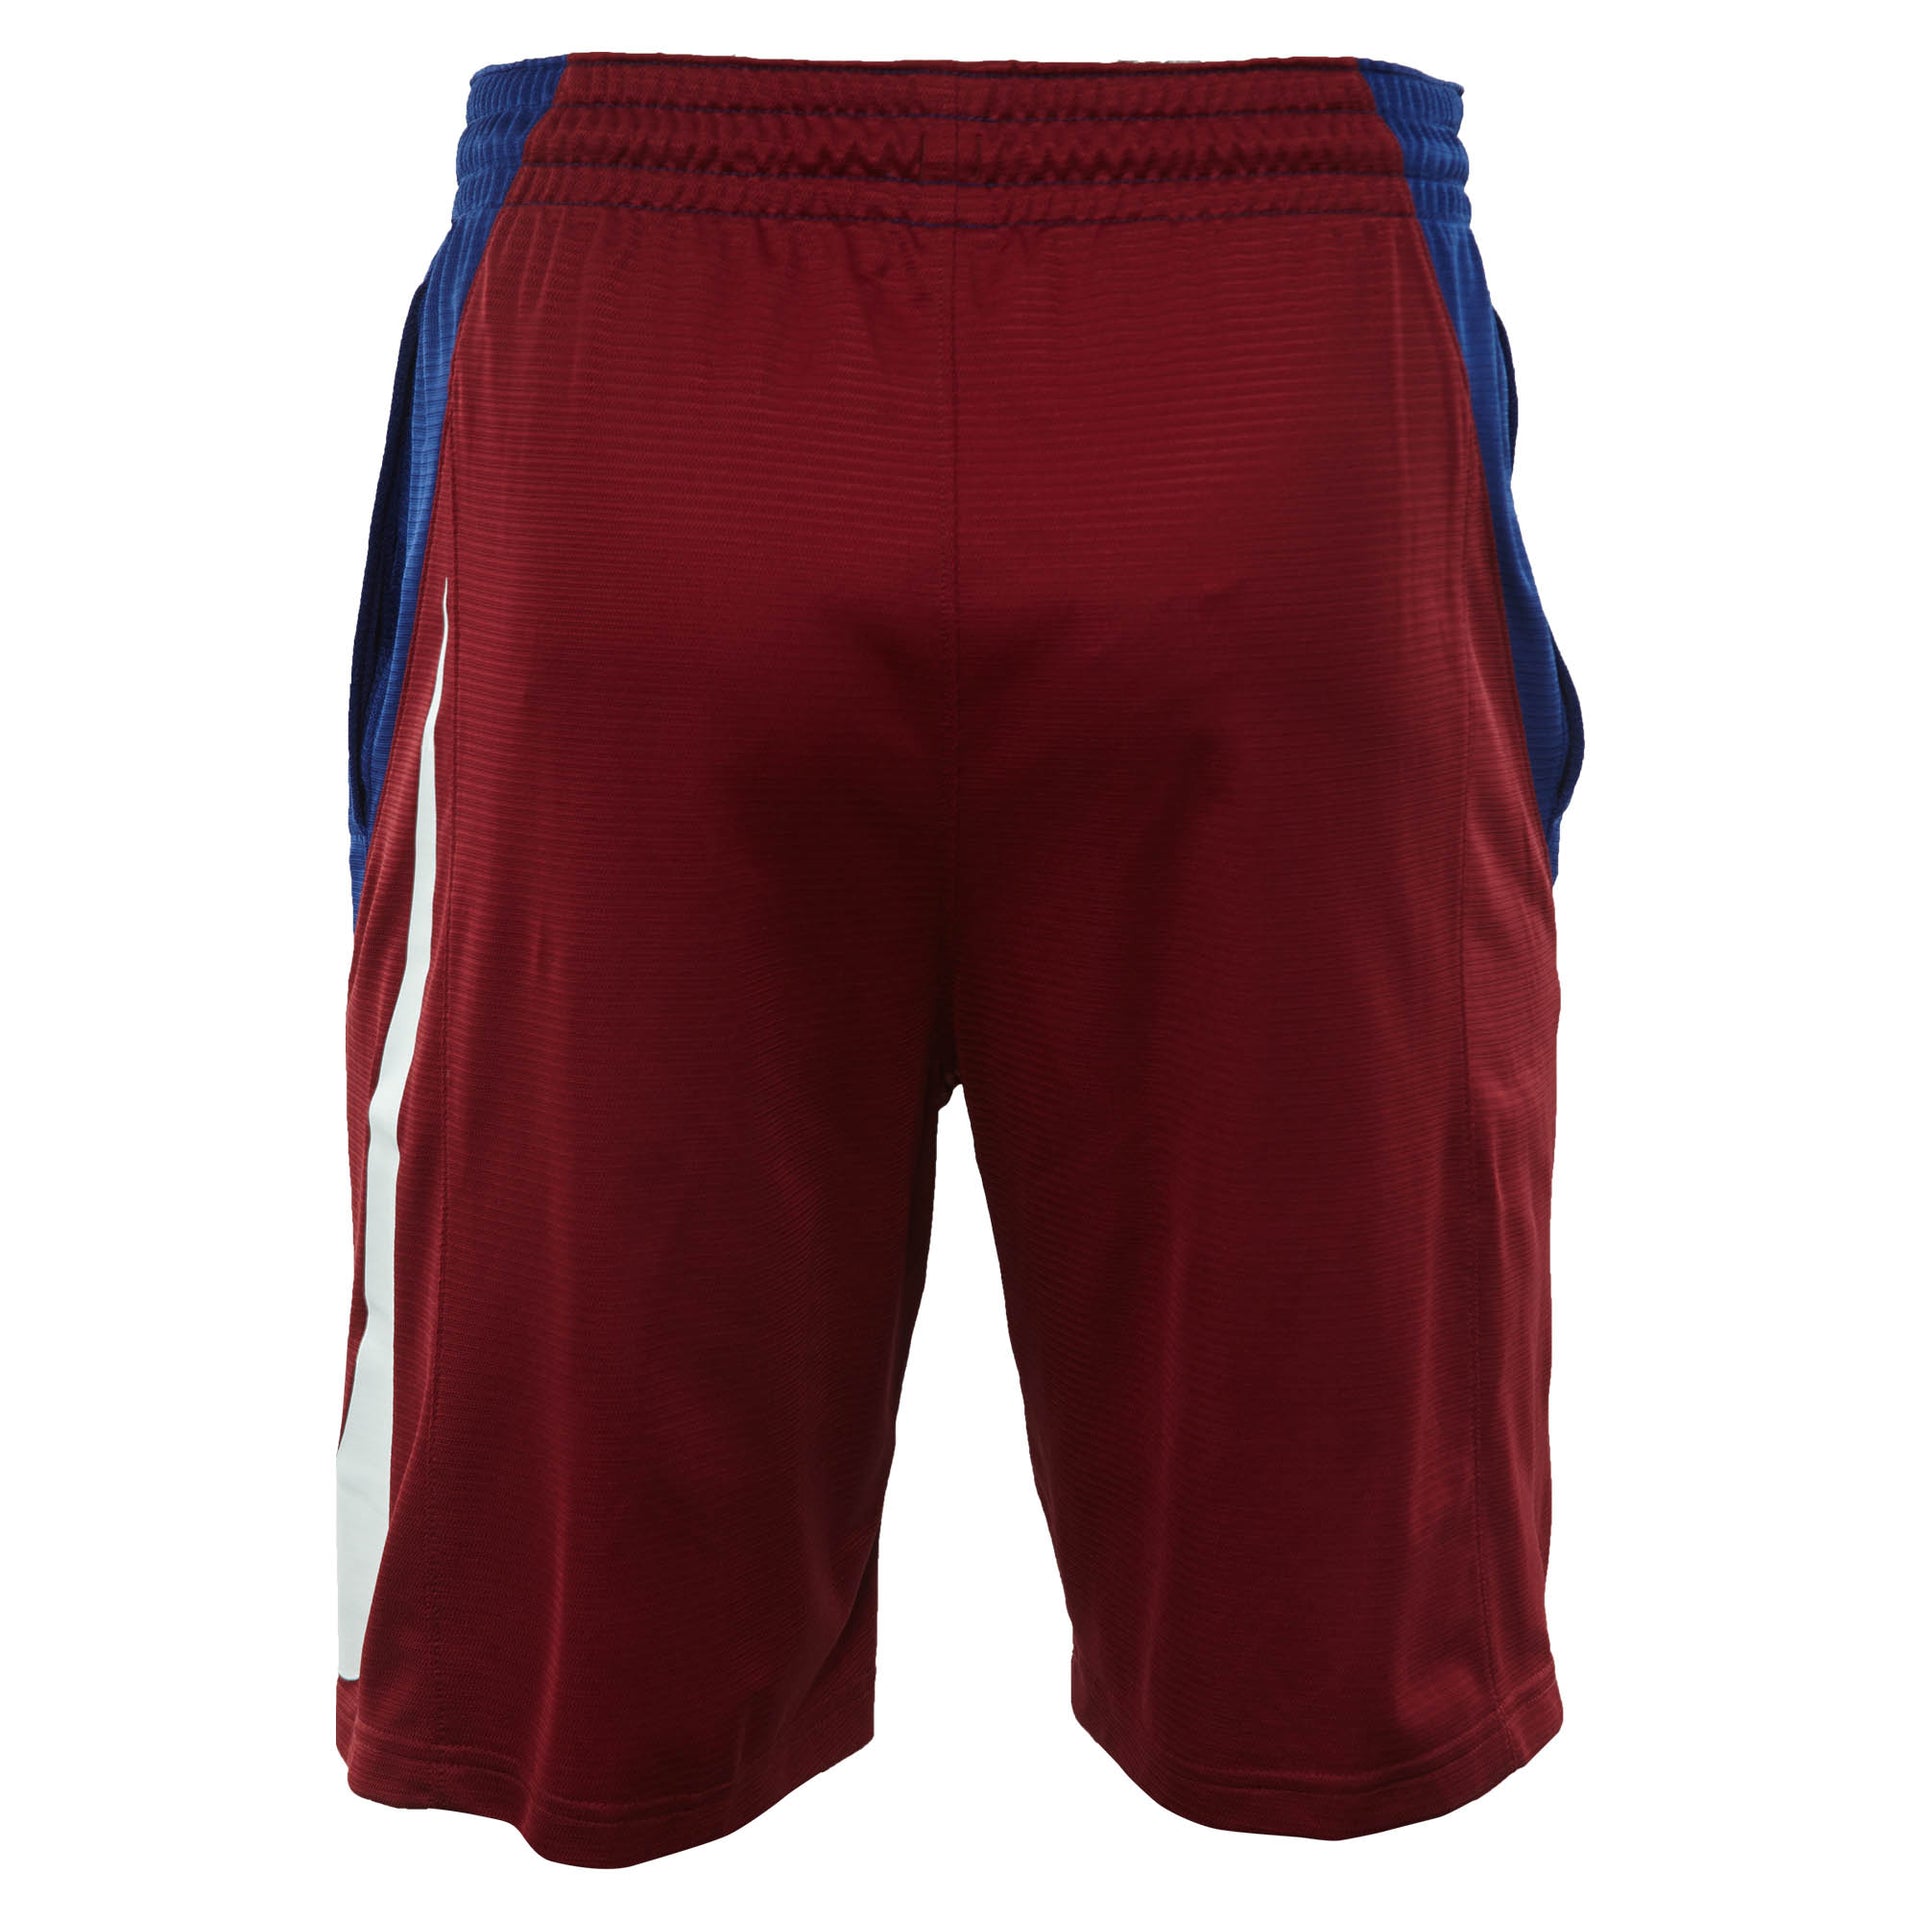 Nike Hbr Basketball Shorts Mens Style : 910704